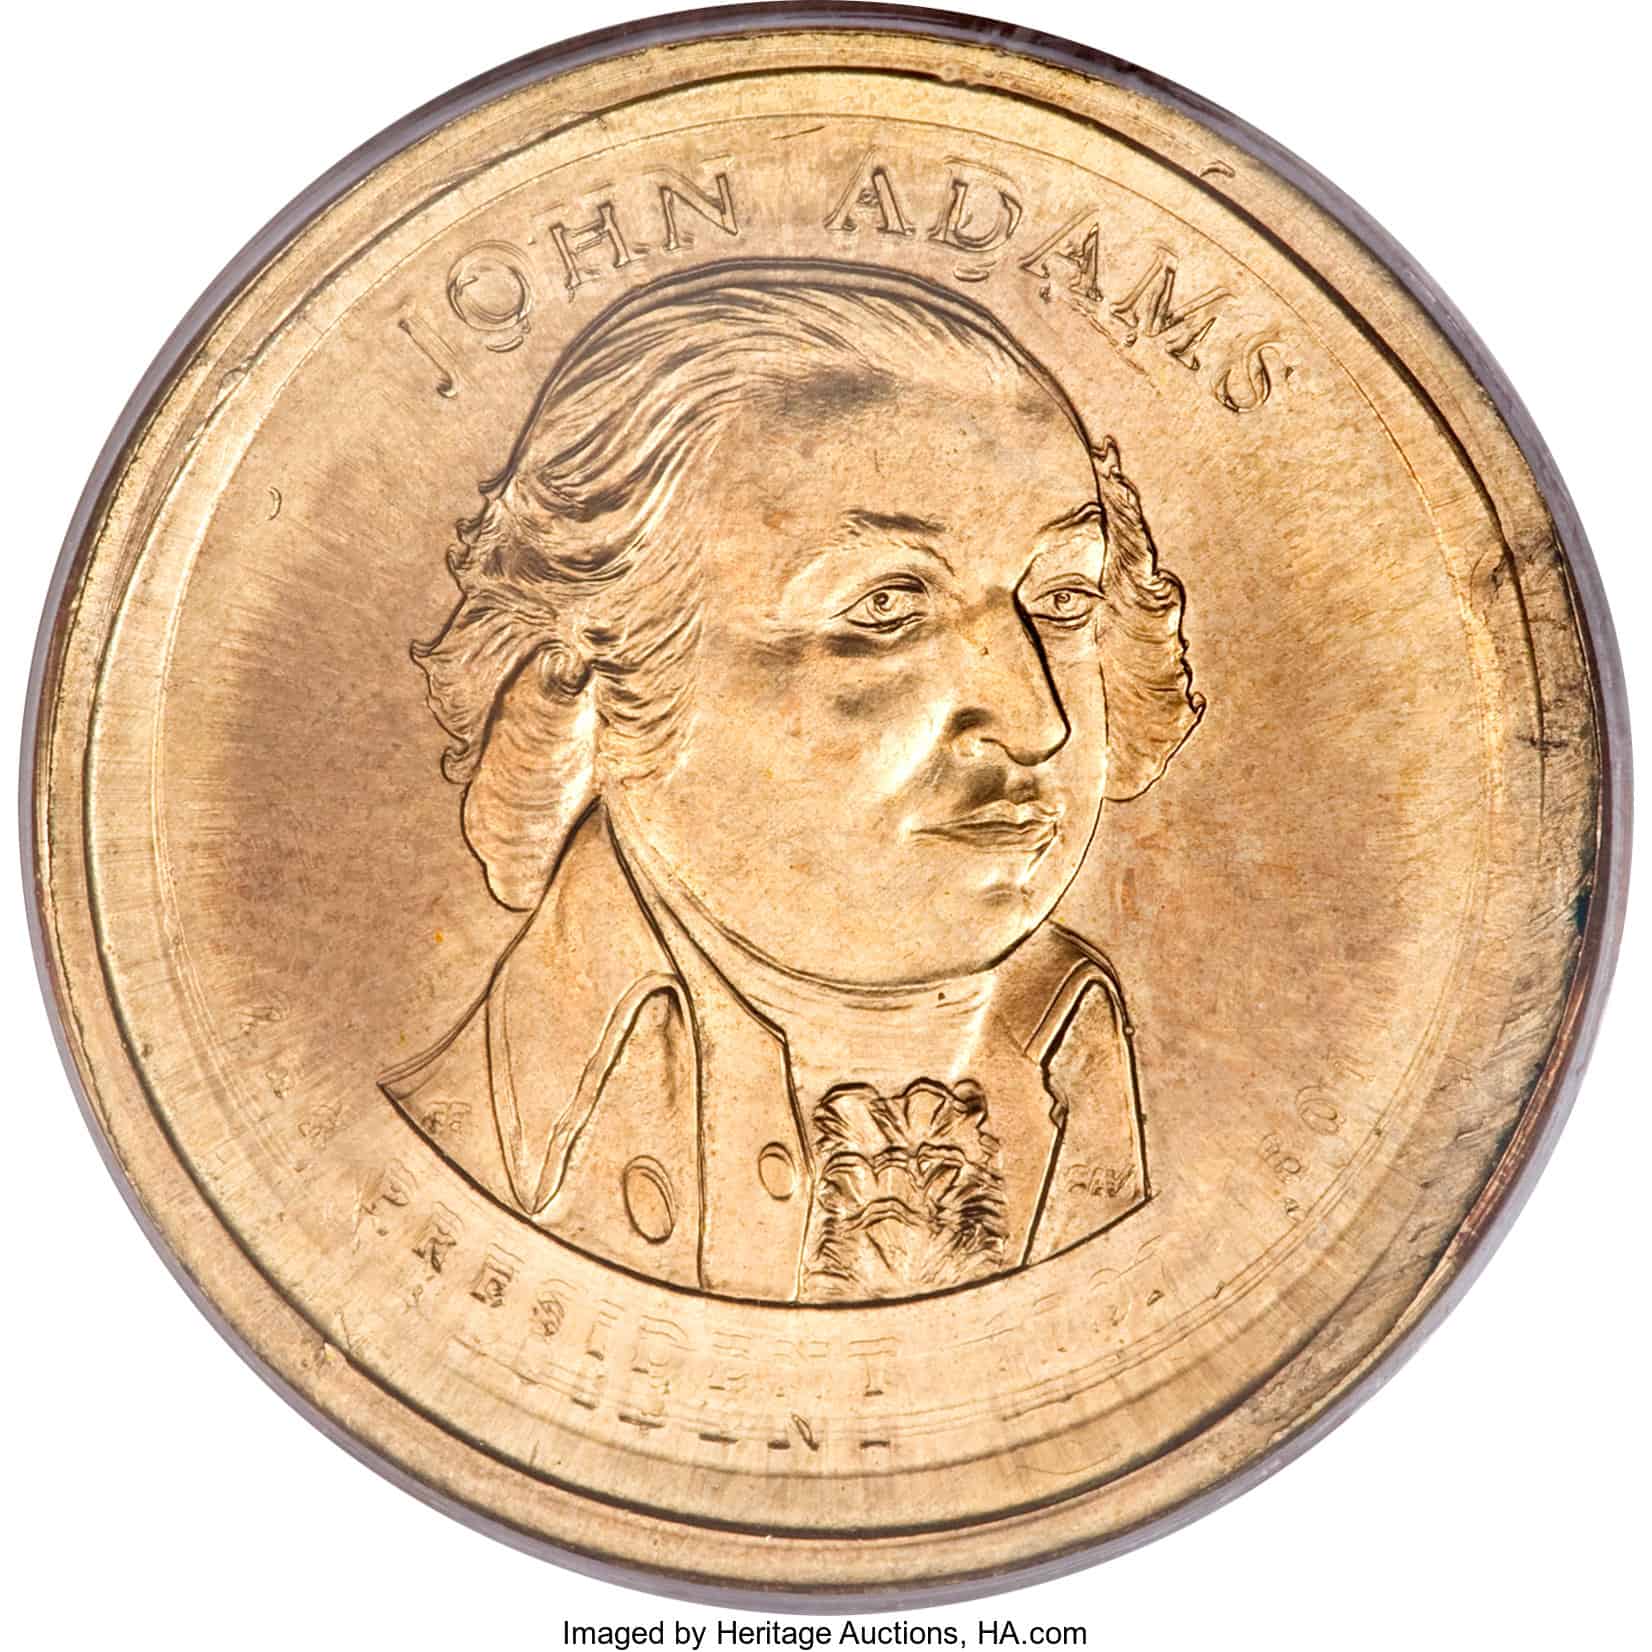 John Adams Dollar Coin Broadstruck Error